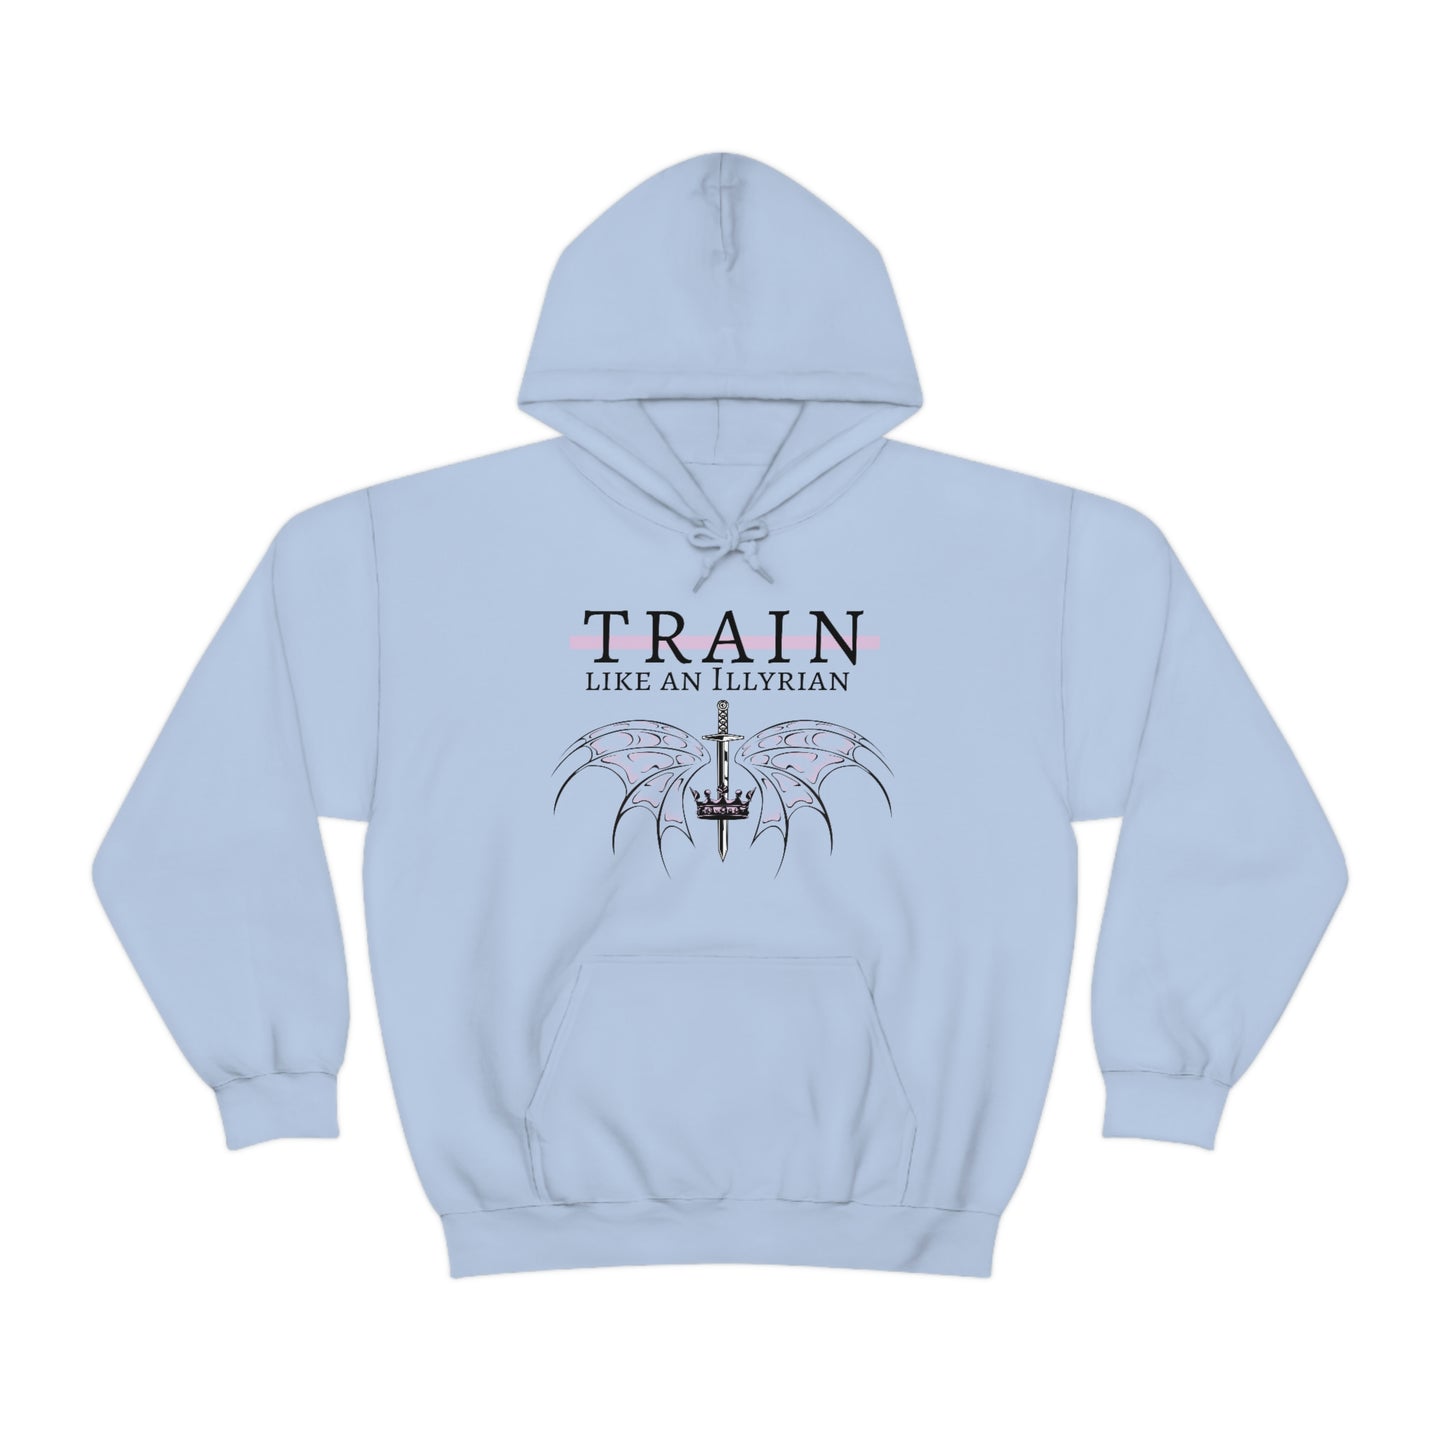 Train like an Illyrian Hooded Sweatshirt